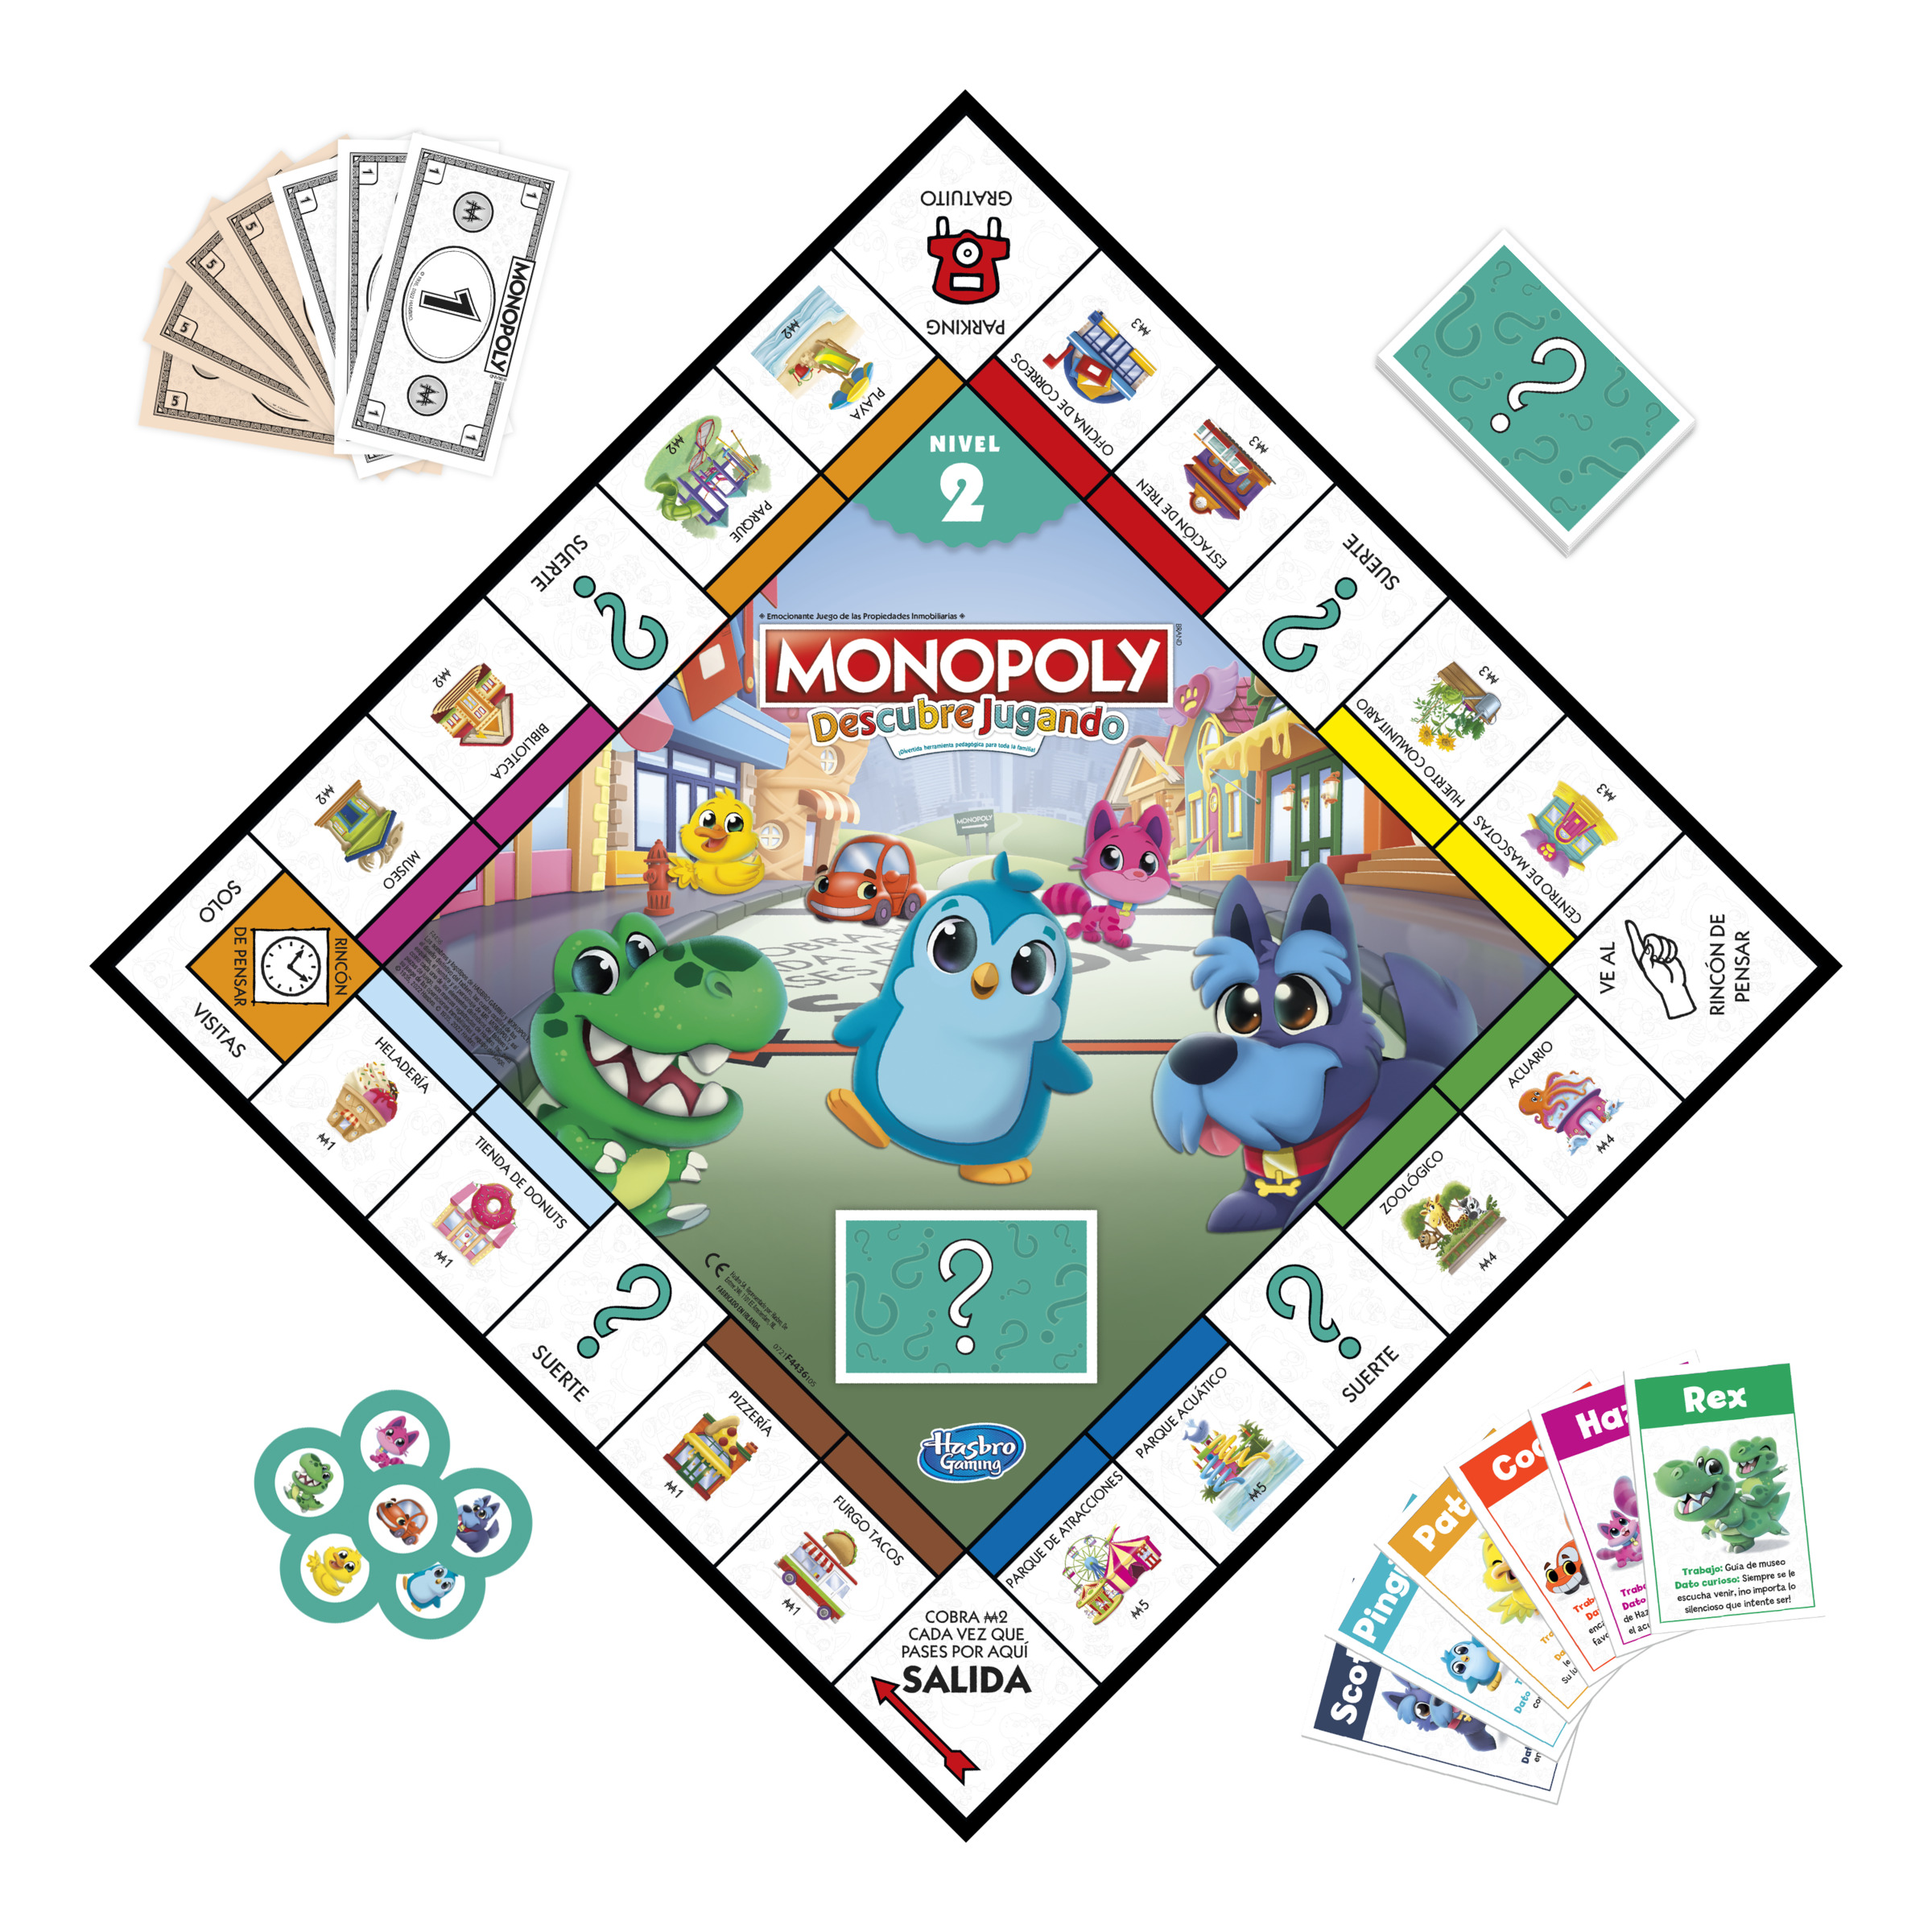 mi primer monopoly